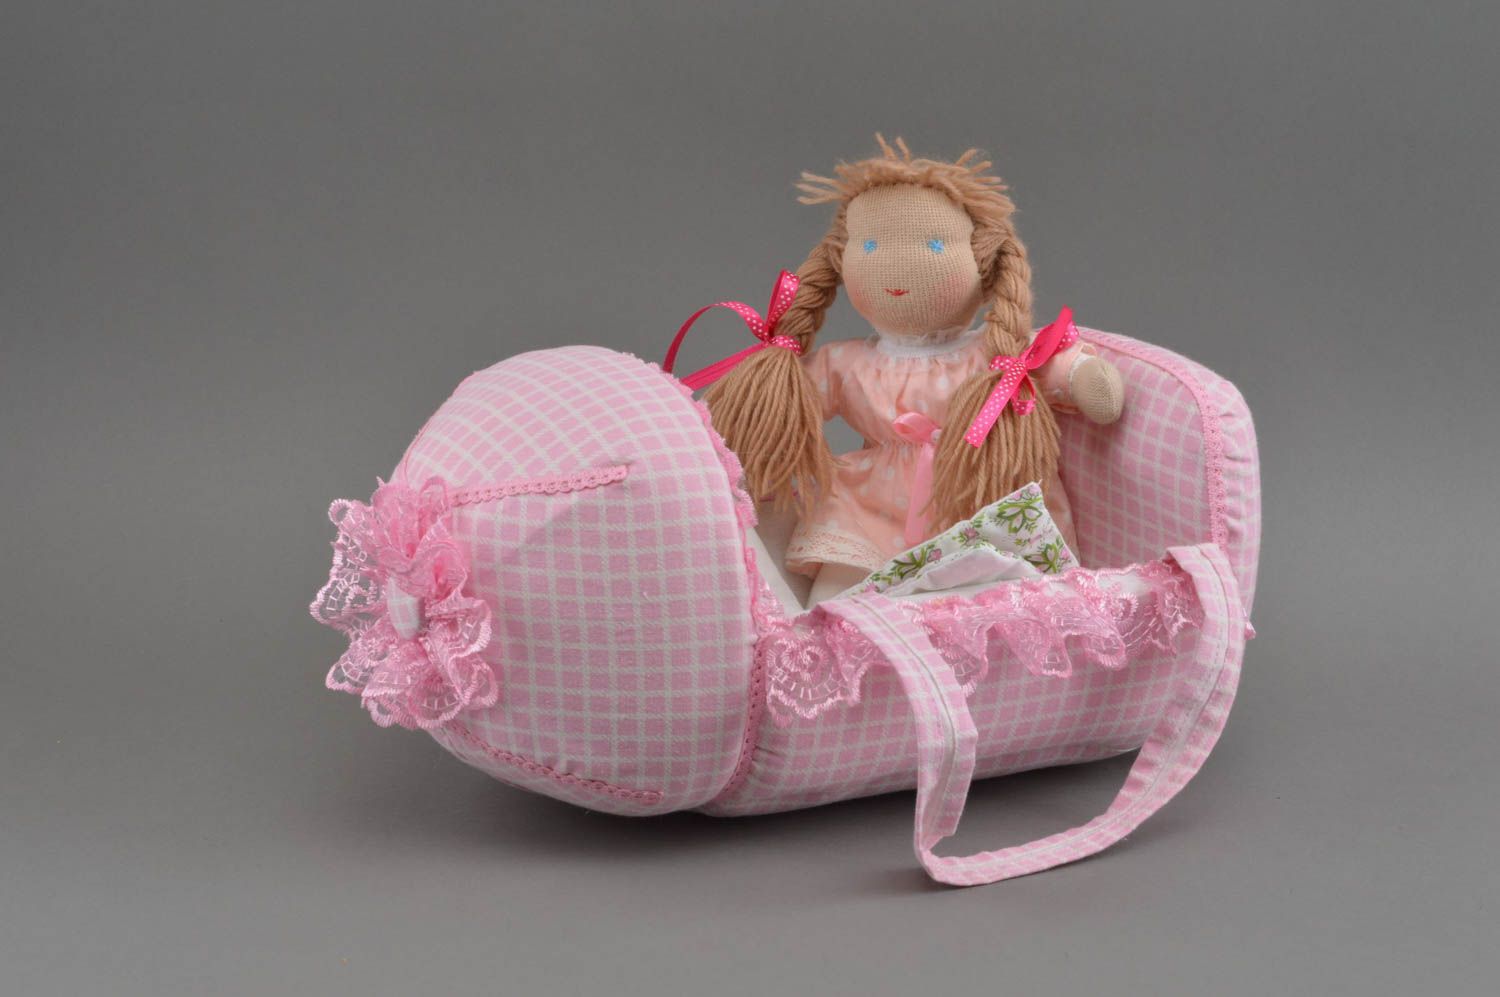 Handmade fabric toy doll in cradle stuffed toy in cradle nursery decor ideas photo 4